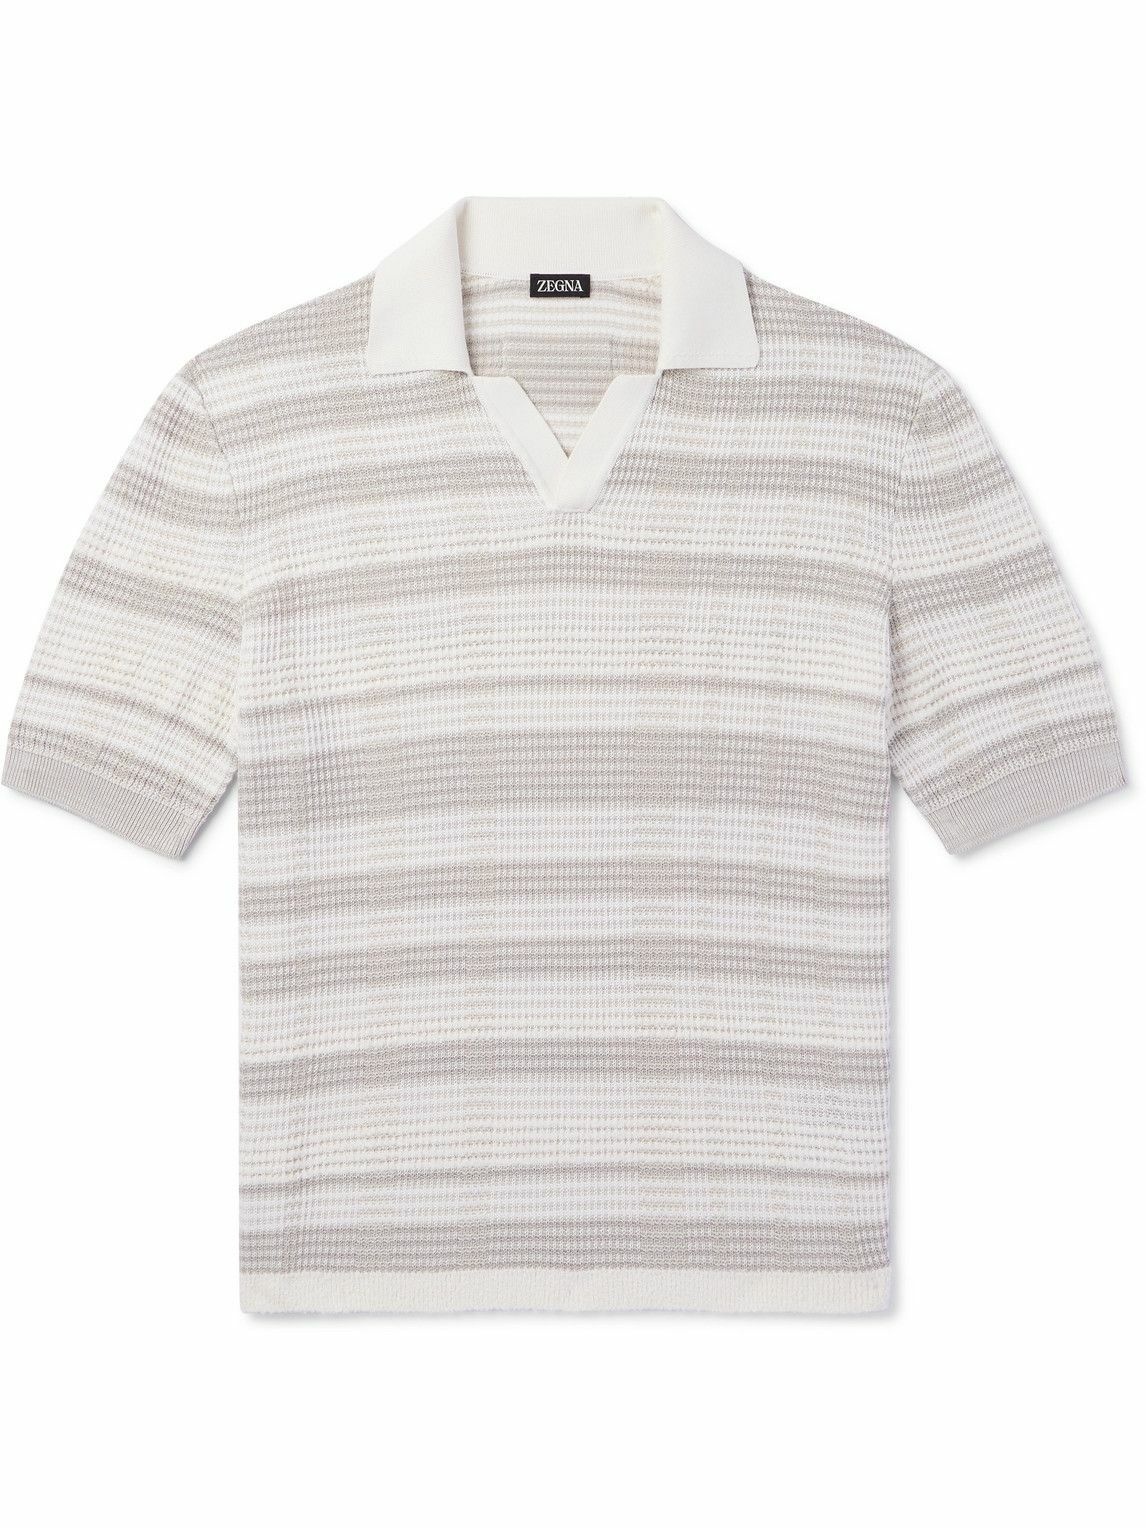 Photo: Zegna - Dégradé Cotton-Blend Polo Shirt - Gray